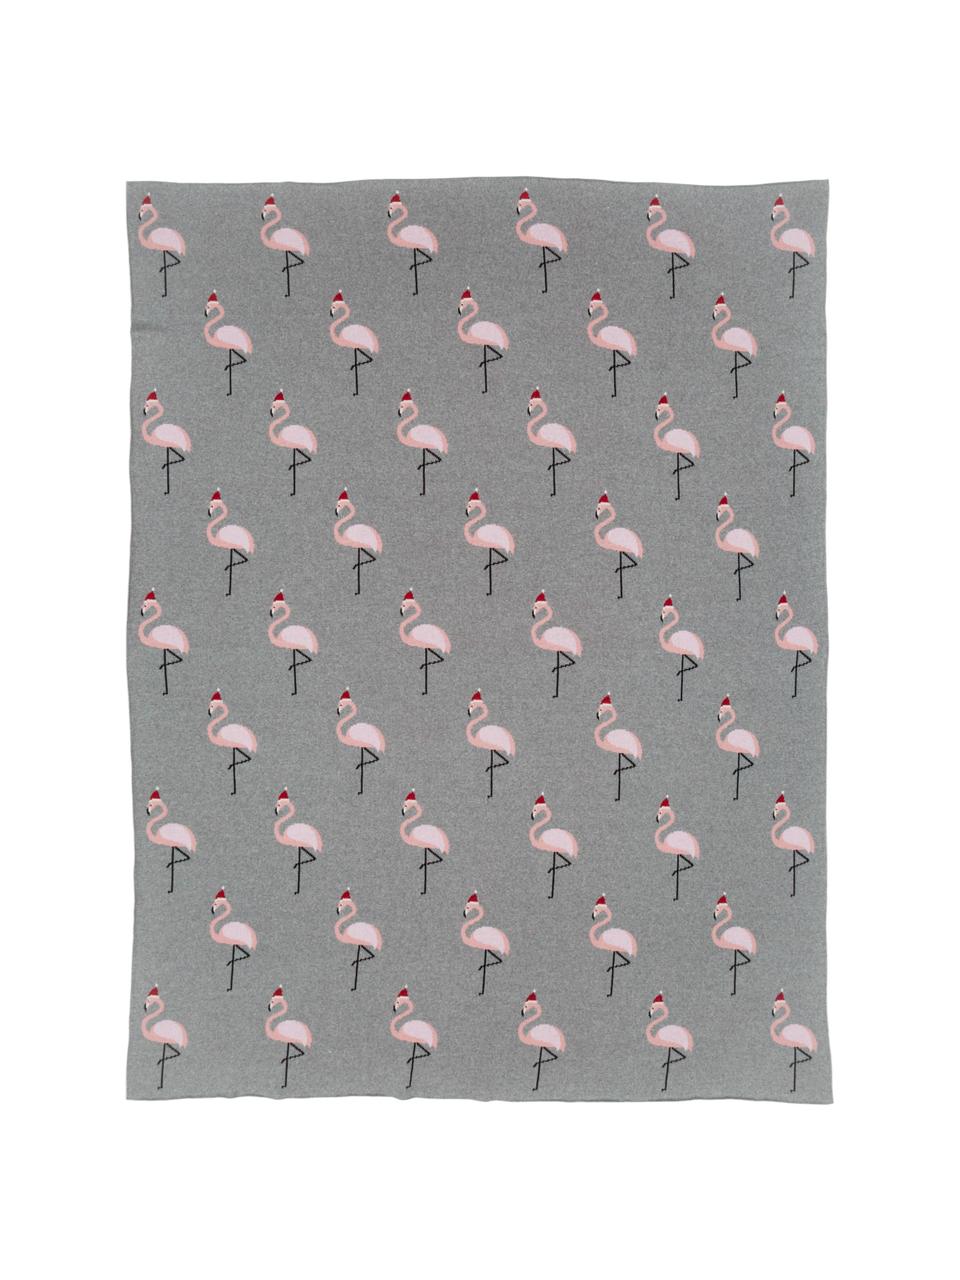 Gebreide dubbelzijdige plaid Flamingo, 100% katoen, Grijs, multicolour, 150 x 200 cm